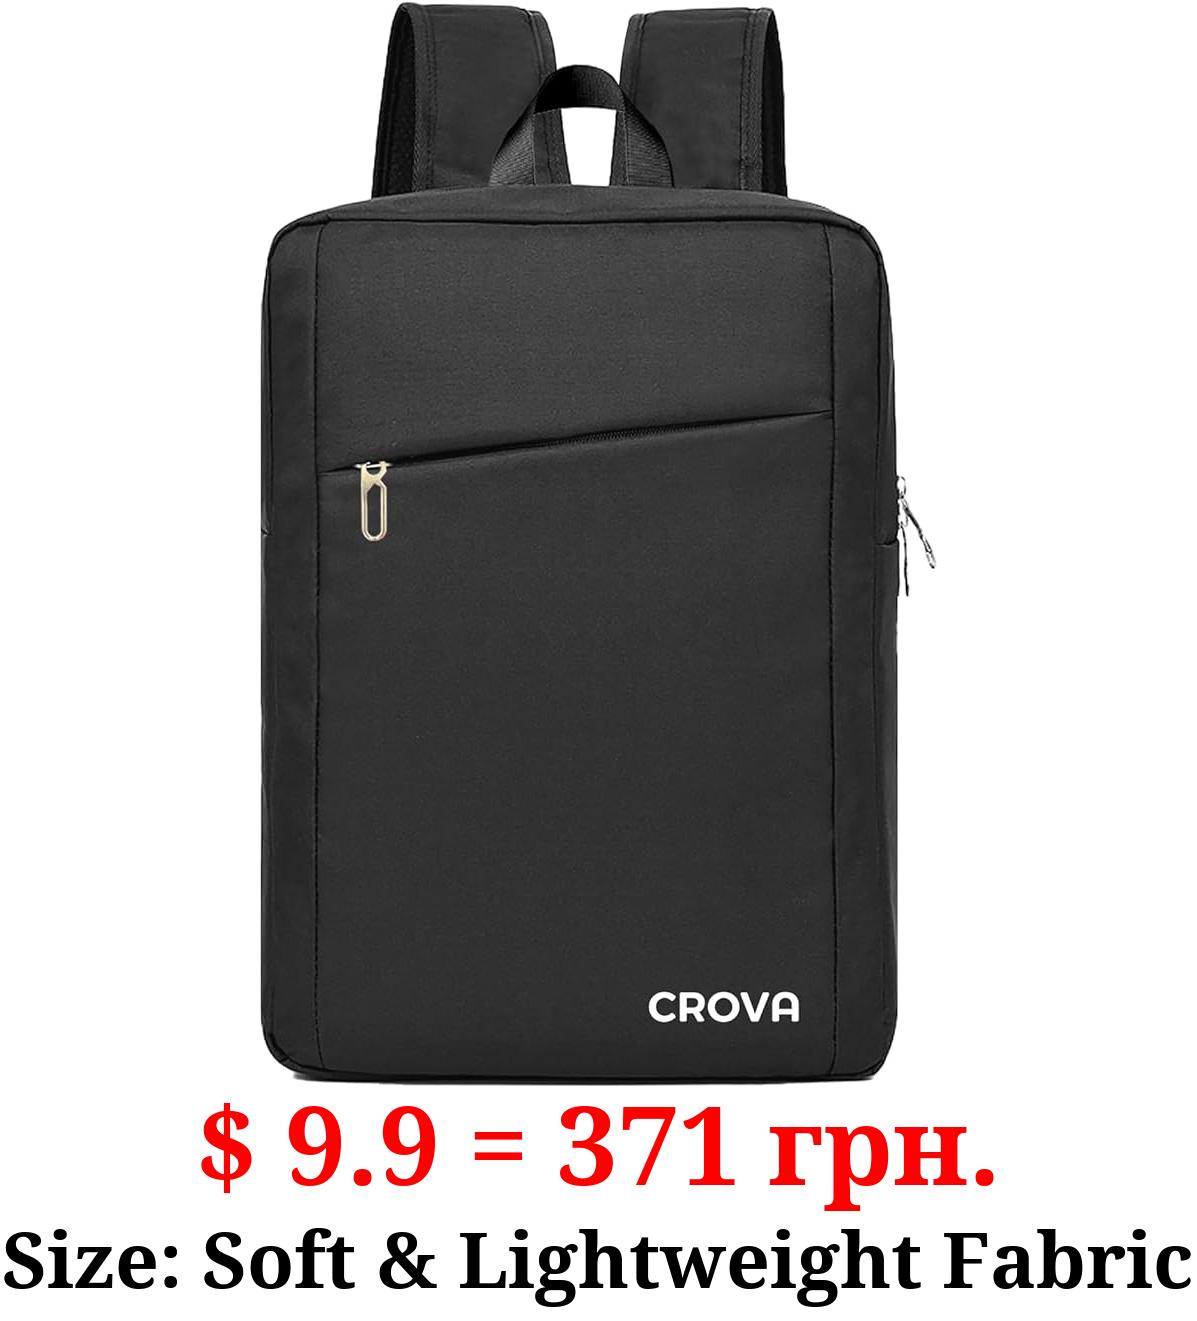 CROVA Laptop Backpack Laptops Travel Business Computer Bag Men Women Fits 15.6 Inch